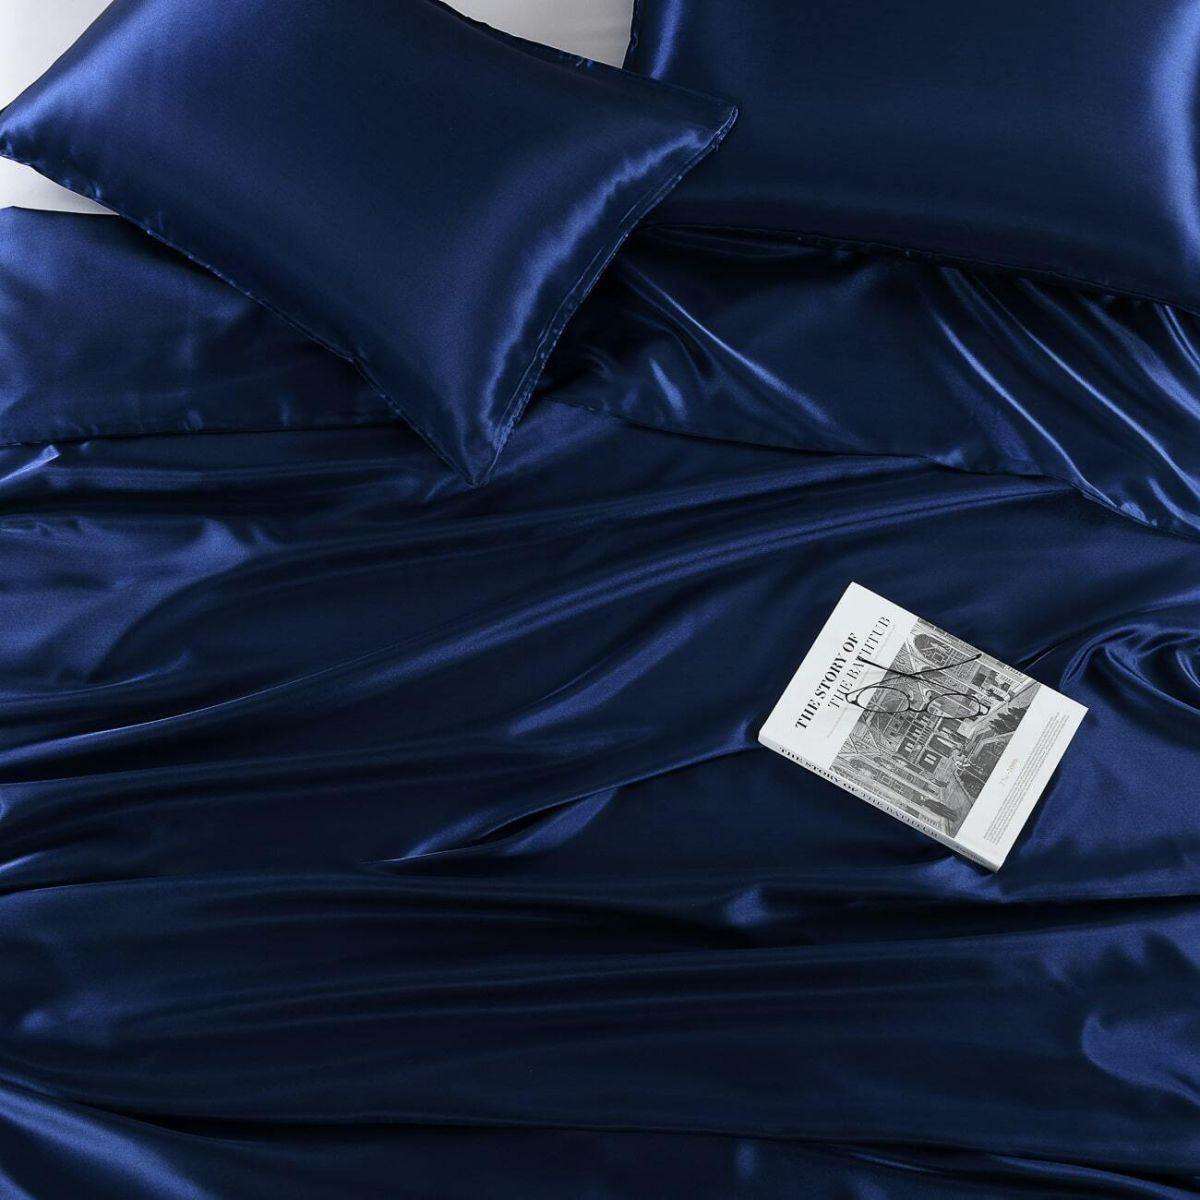 A close-up image of satin bed sheets.